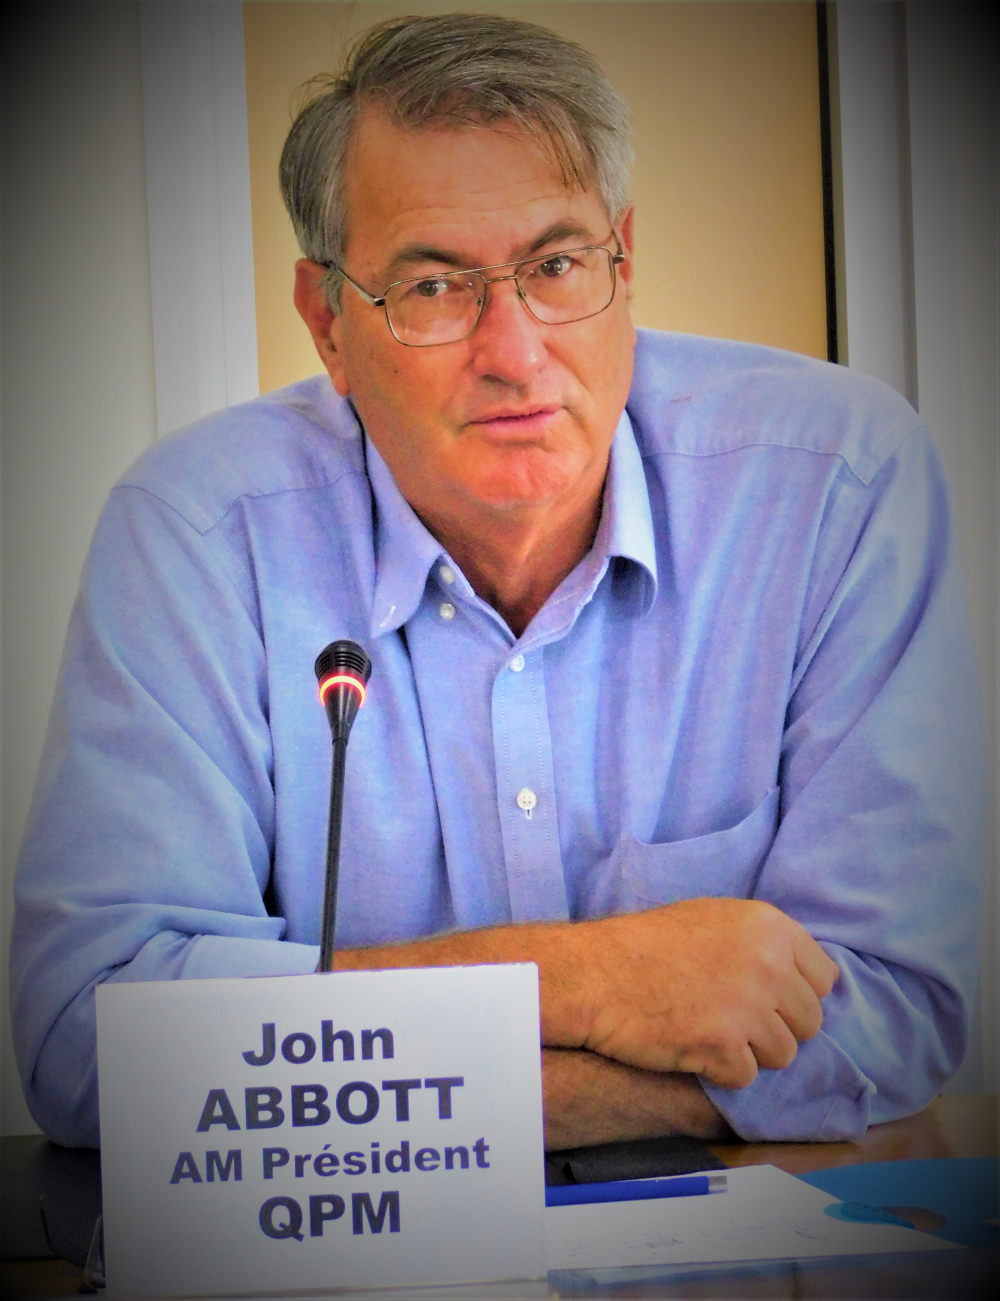 Monsieur John ABBOTT, président de Queensland Pacific Metals (QPM).